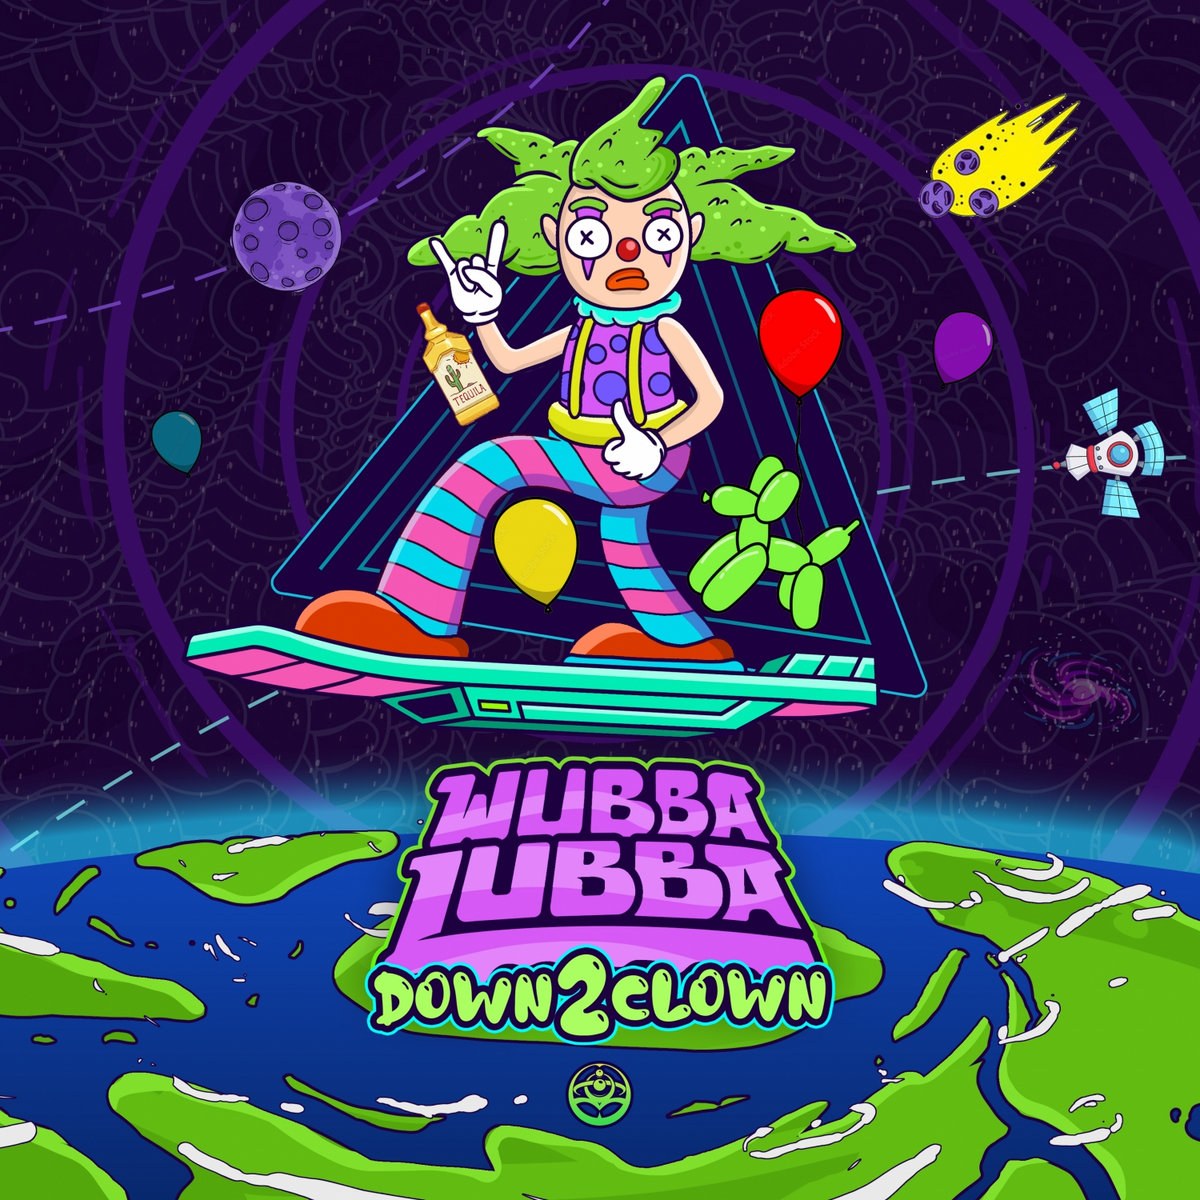 Wubba Tubba's new single 